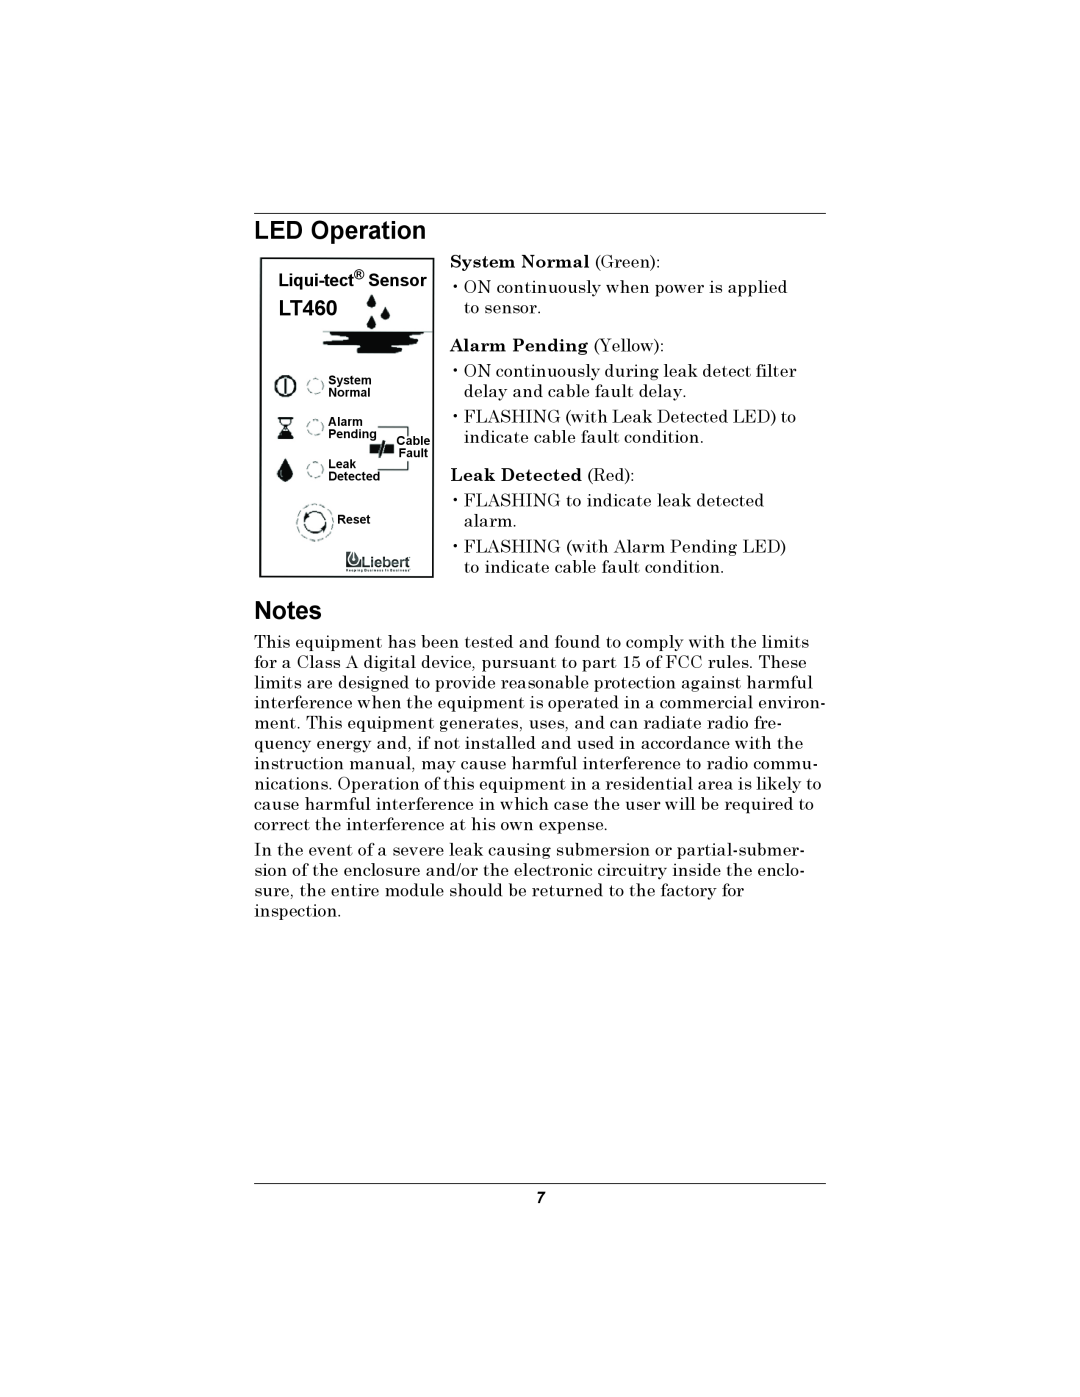 Emerson installation manual LED Operation, LT460 